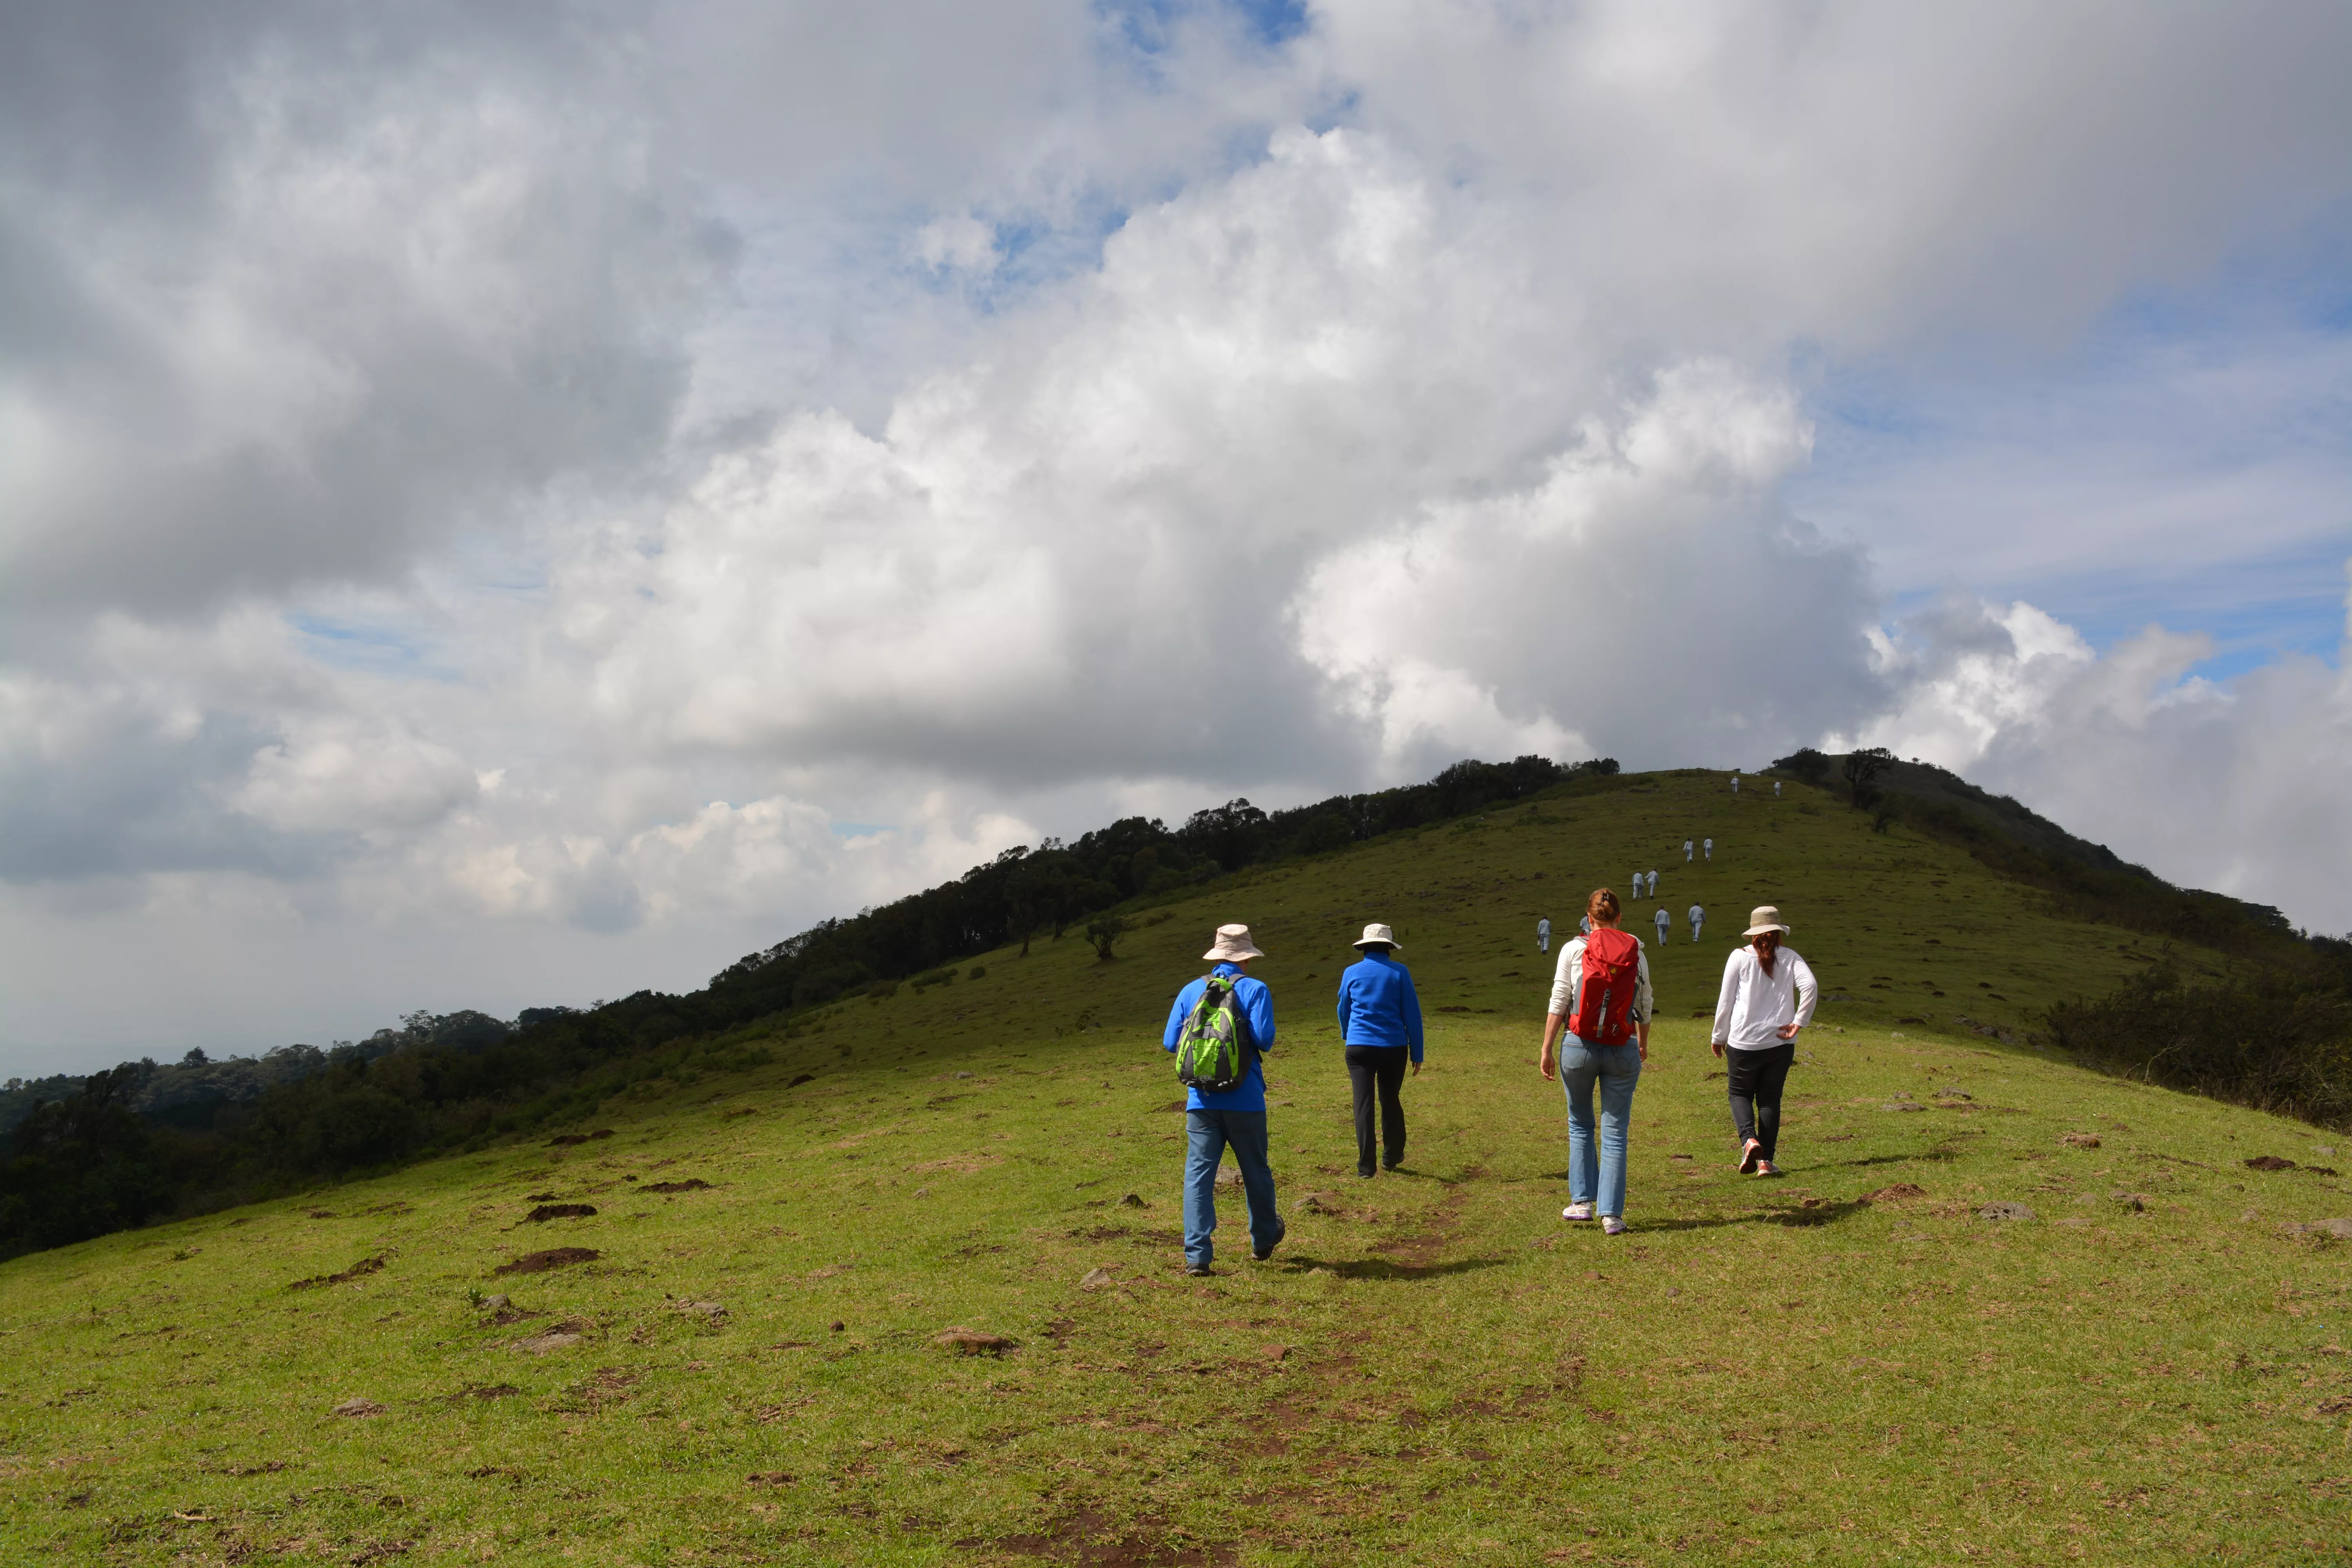 Ngong Hills in Kenya, Africa | Trekking & Hiking - Rated 3.7